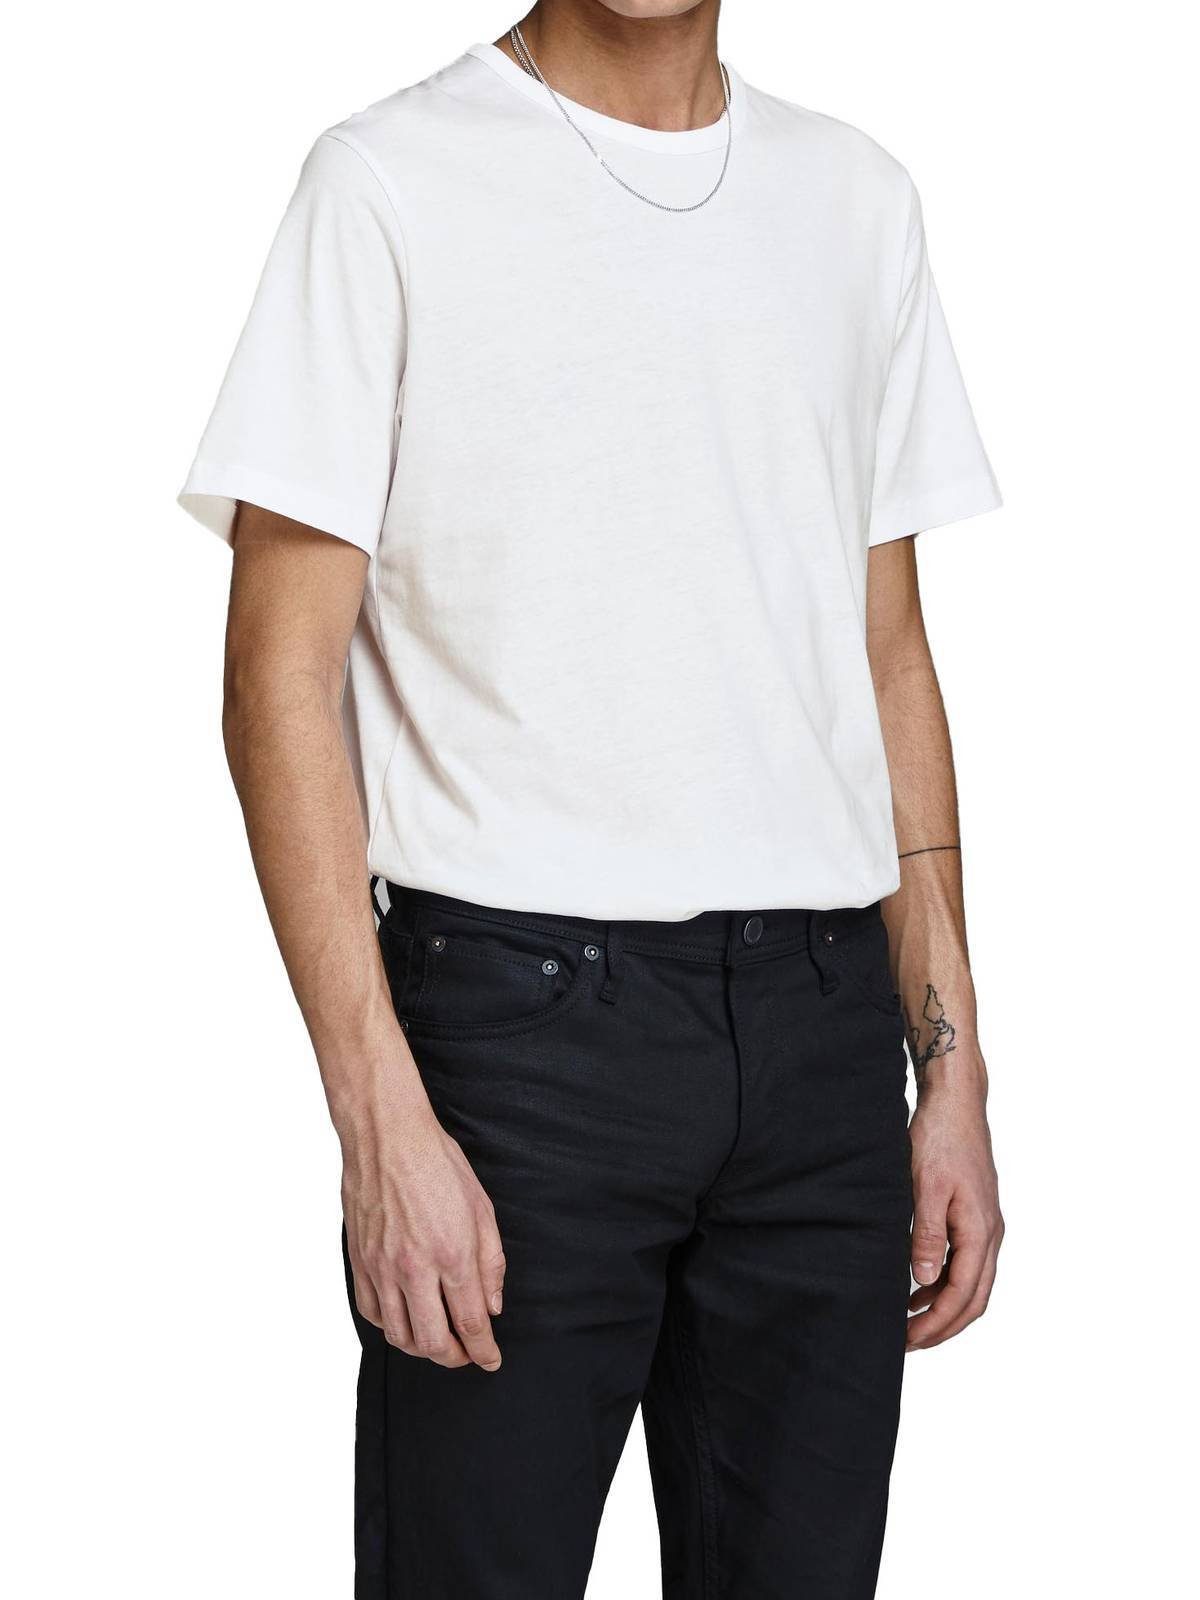 Jack Weiß T-Shirt, CREW TEE Herren T-Shirt - NECK JACBASIC & Jones 4er Pack